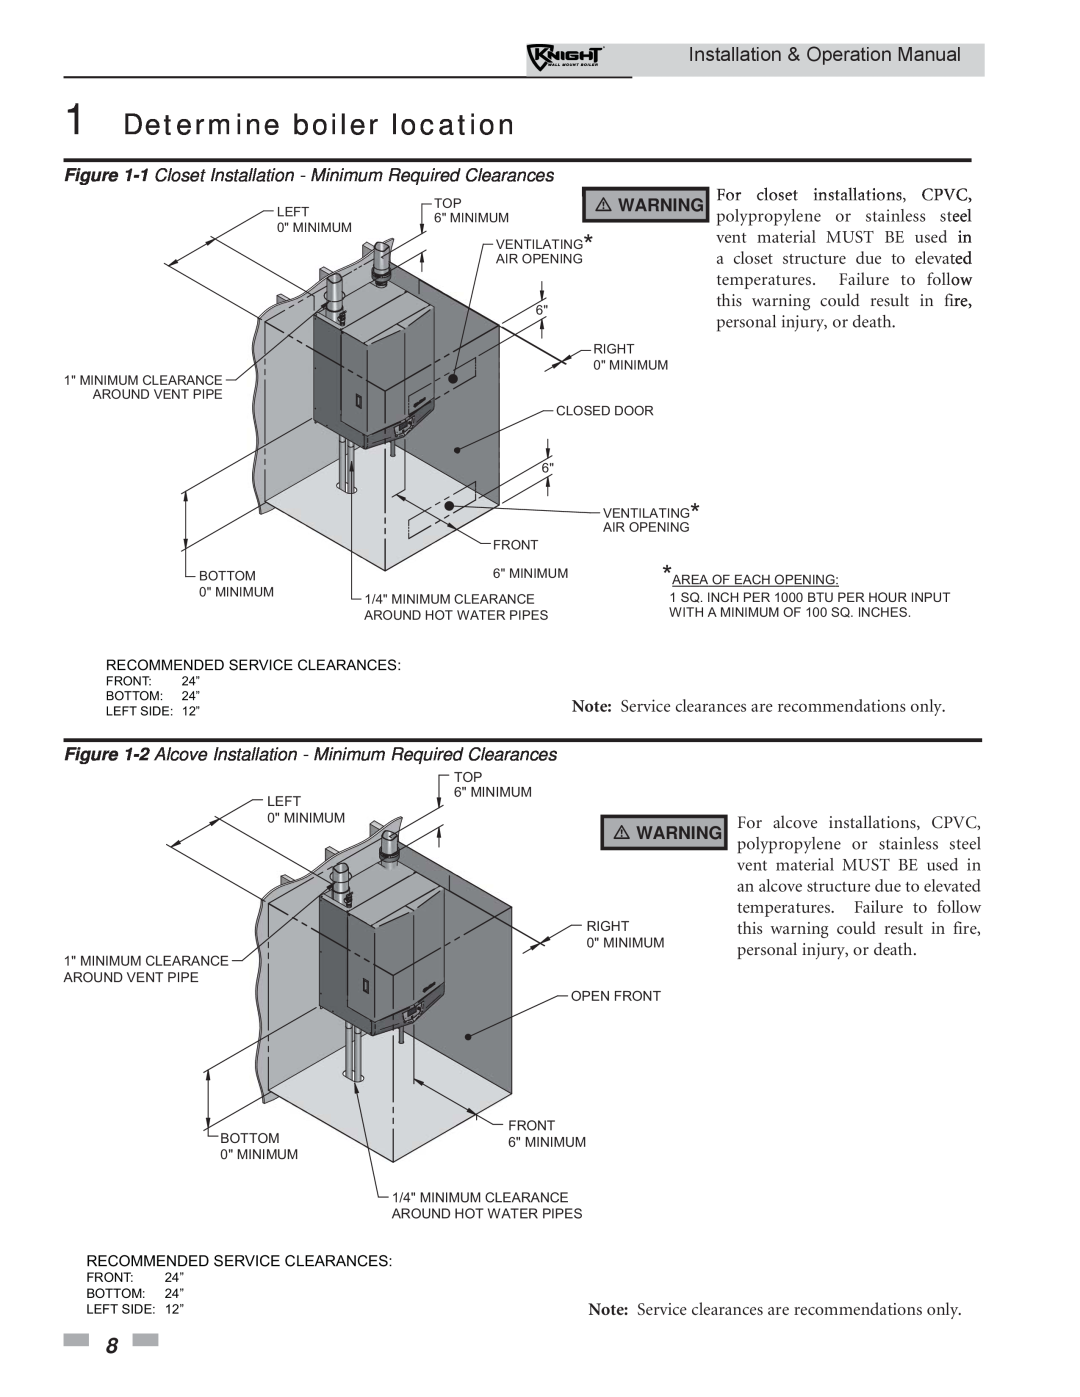 Lochinvar WH 55-399 operation manual Determine boiler location, Installation & Operation Manual 